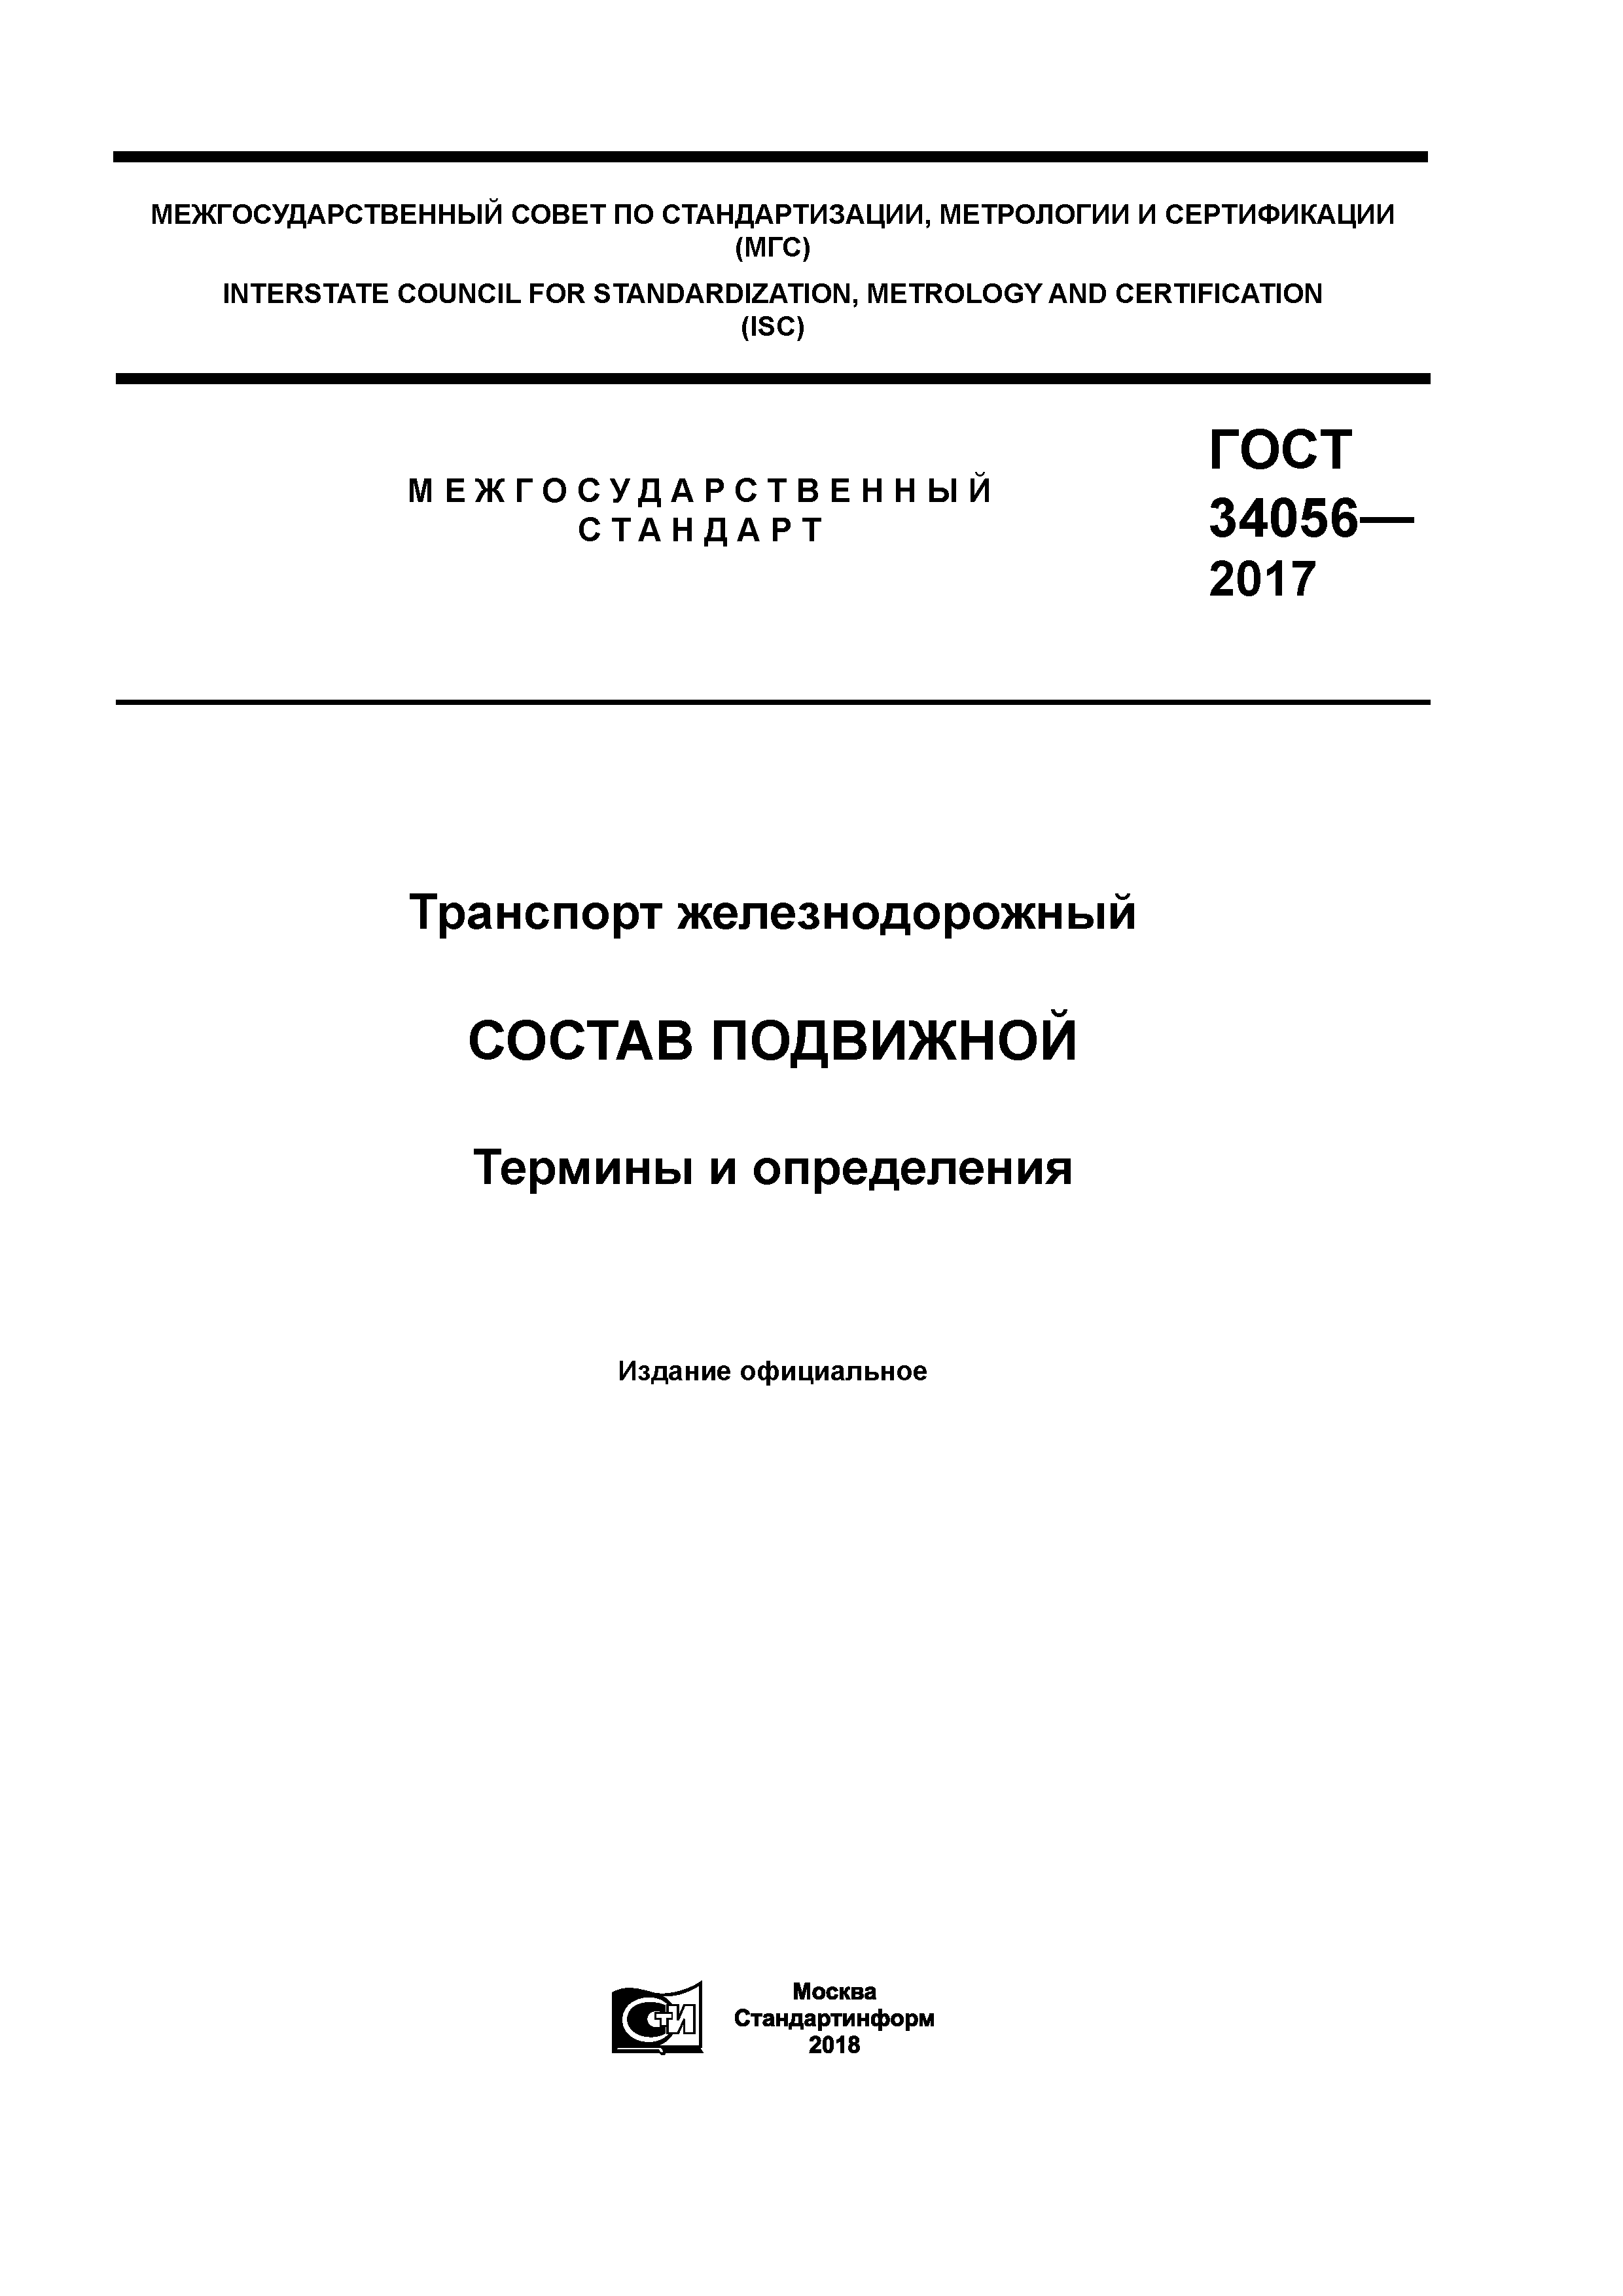 ГОСТ 34056-2017